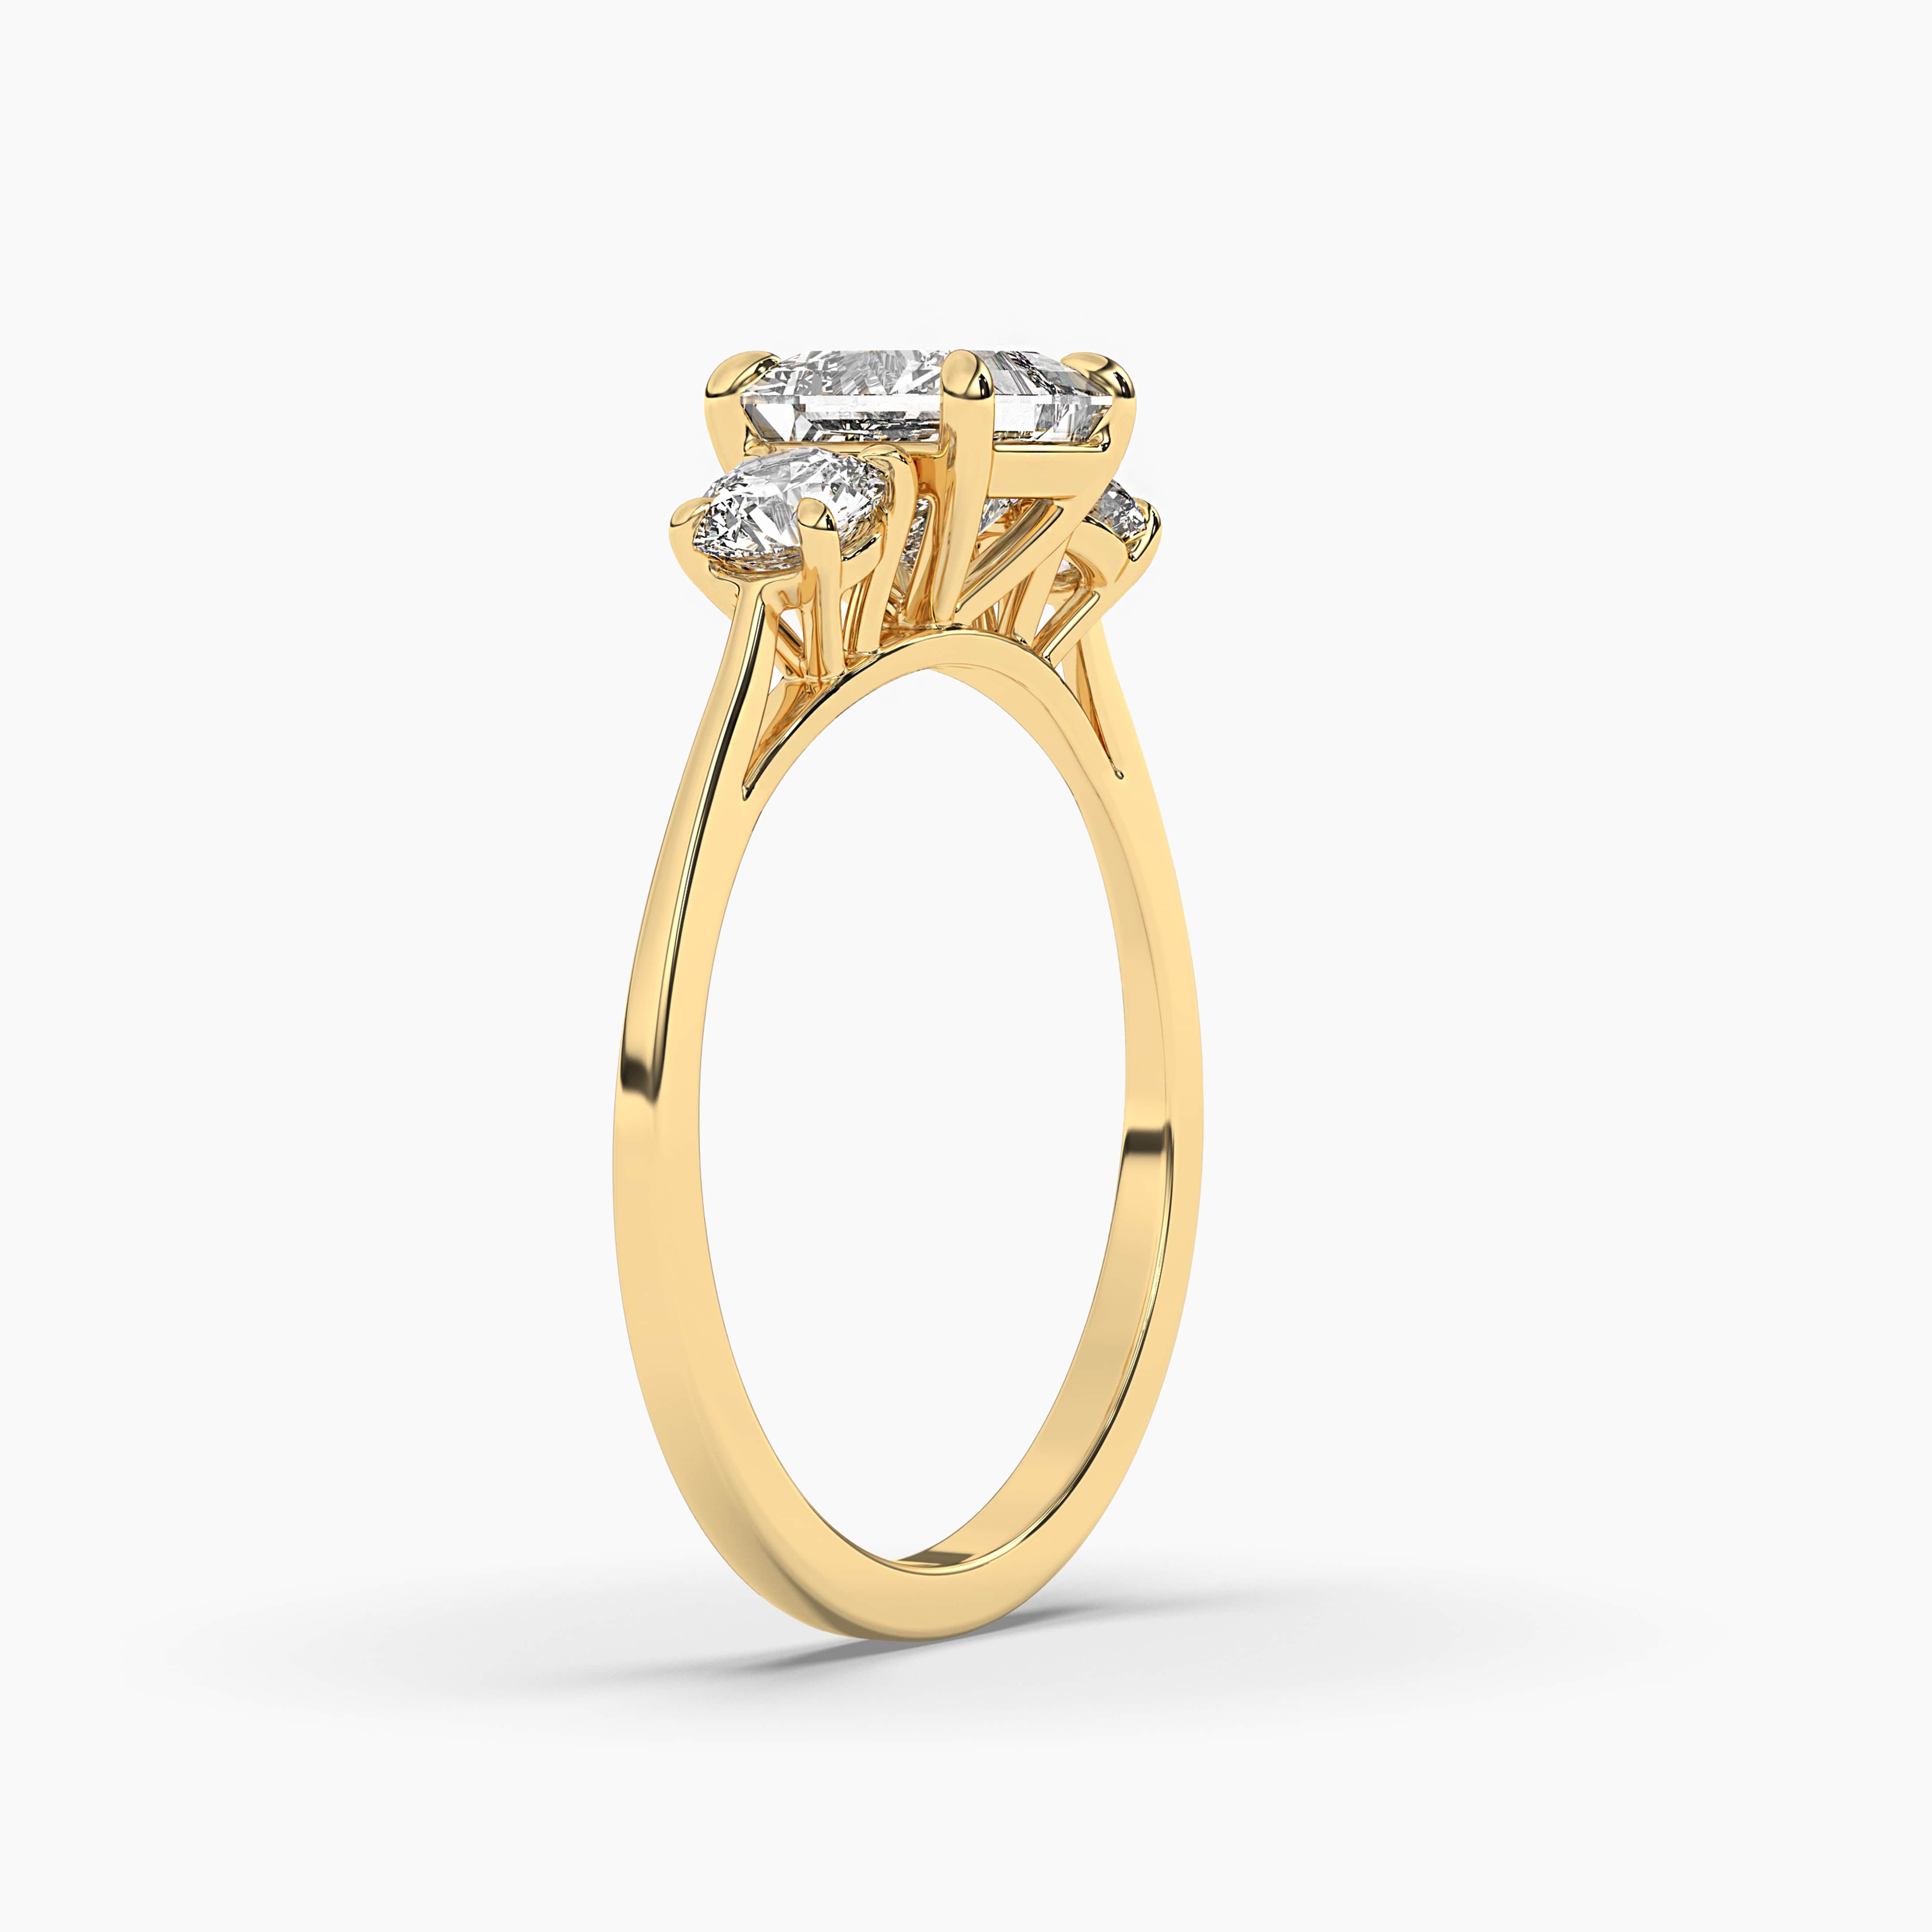 Women's Real Princess Cut Diamond Engagement Rings